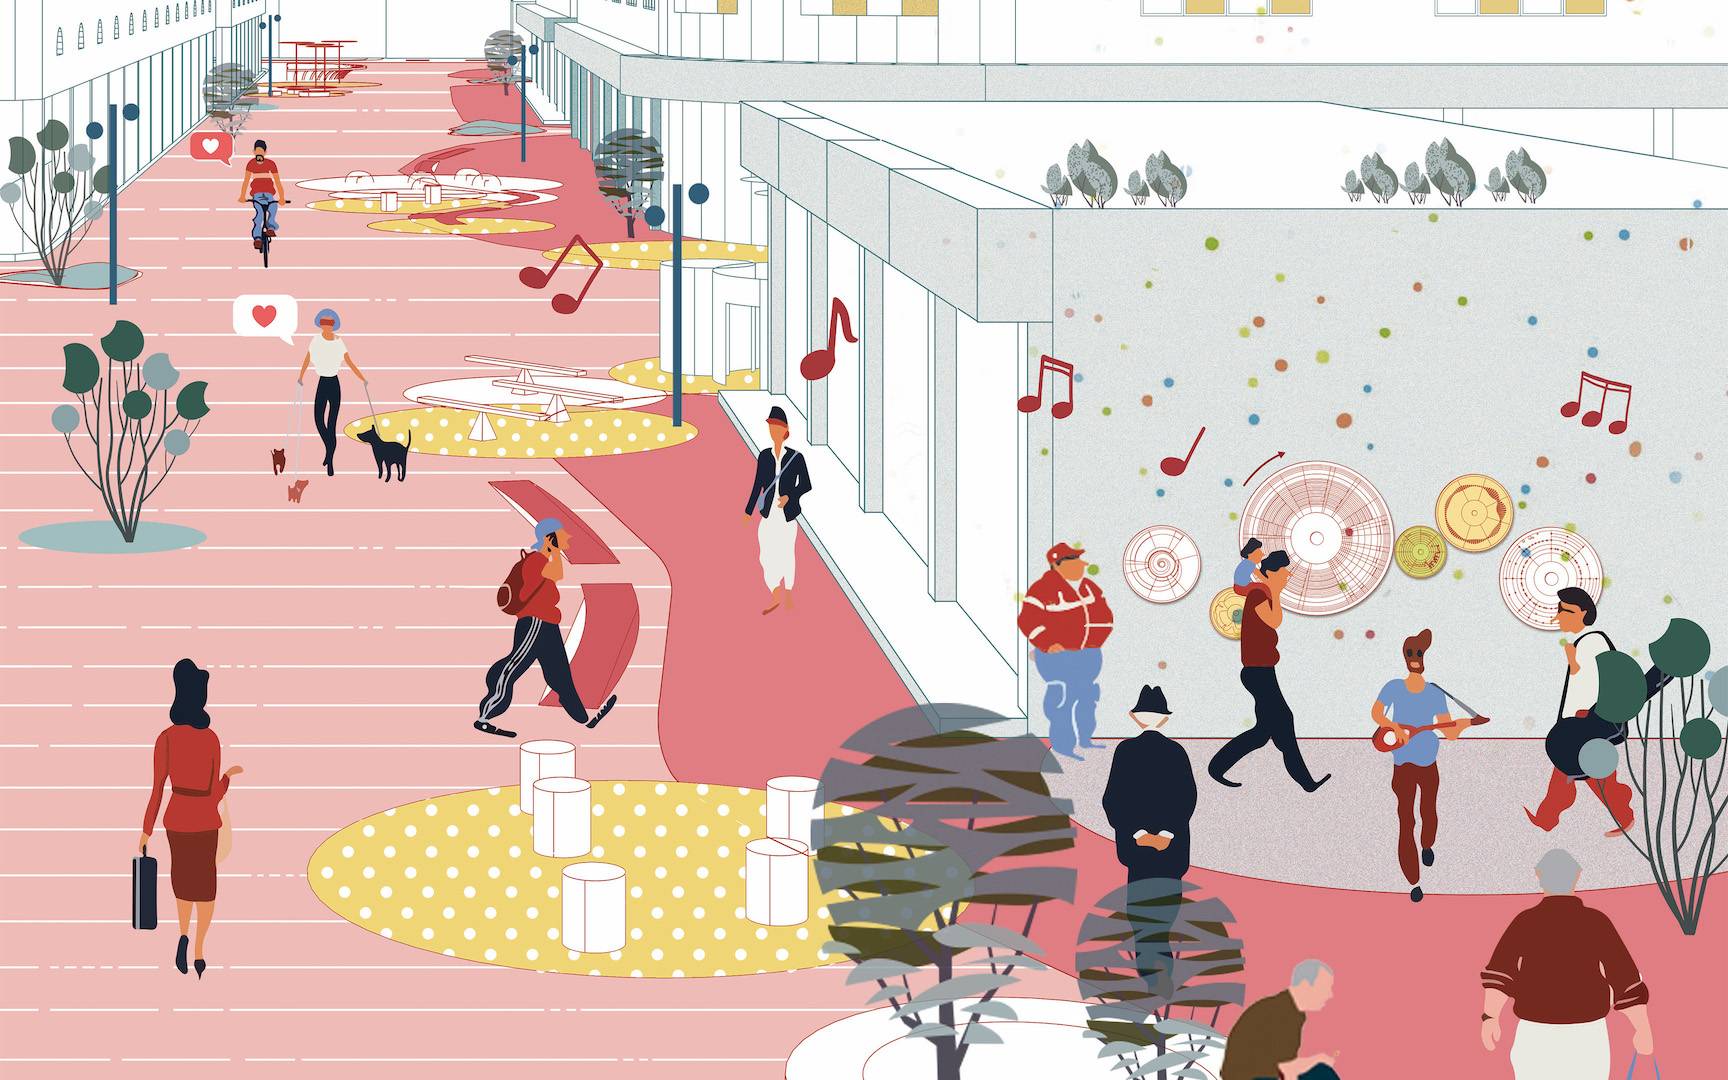 Image: Diagram of community street design based on human perception and spatial experience, by CHEN Guo, LEI Lian, LIU Chang, LIU Junrui, ZHANG Enjia, 2019